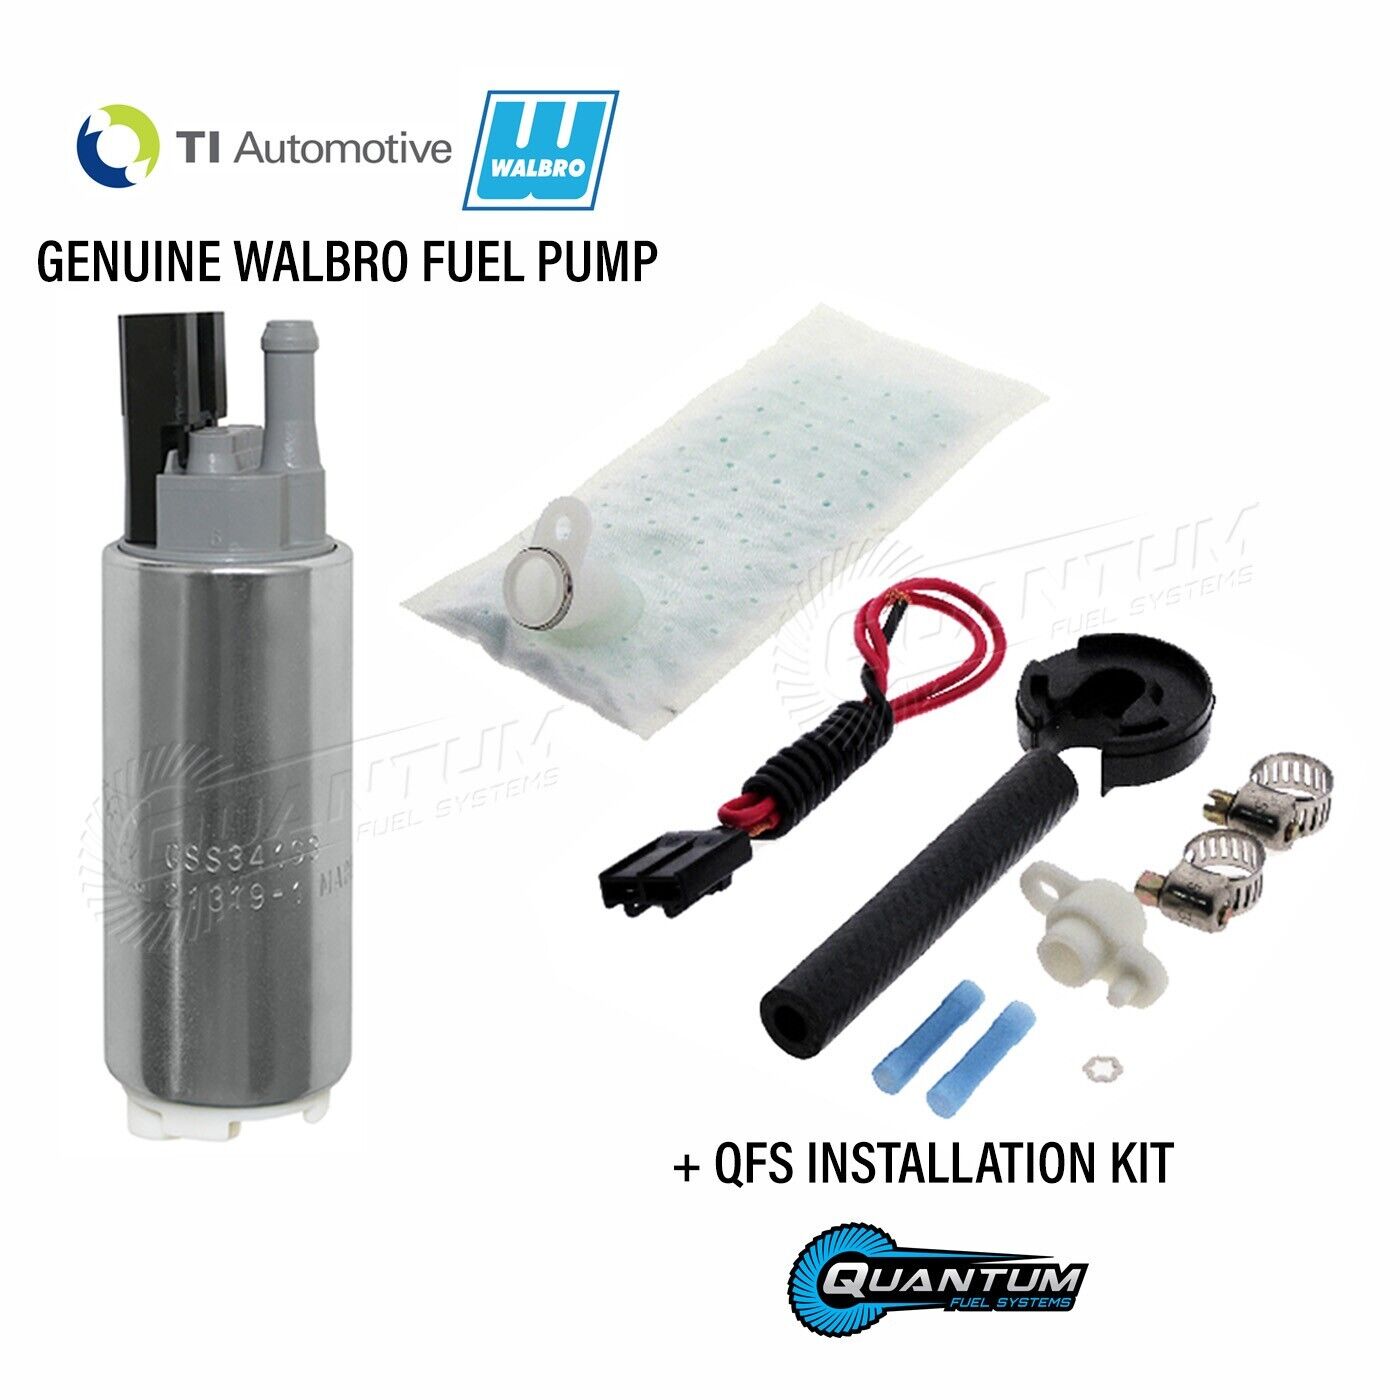 GENUINE WALBRO GSS341 255LPH Fuel Pump +QFS Kit for 88-93 Civic CRX Integra